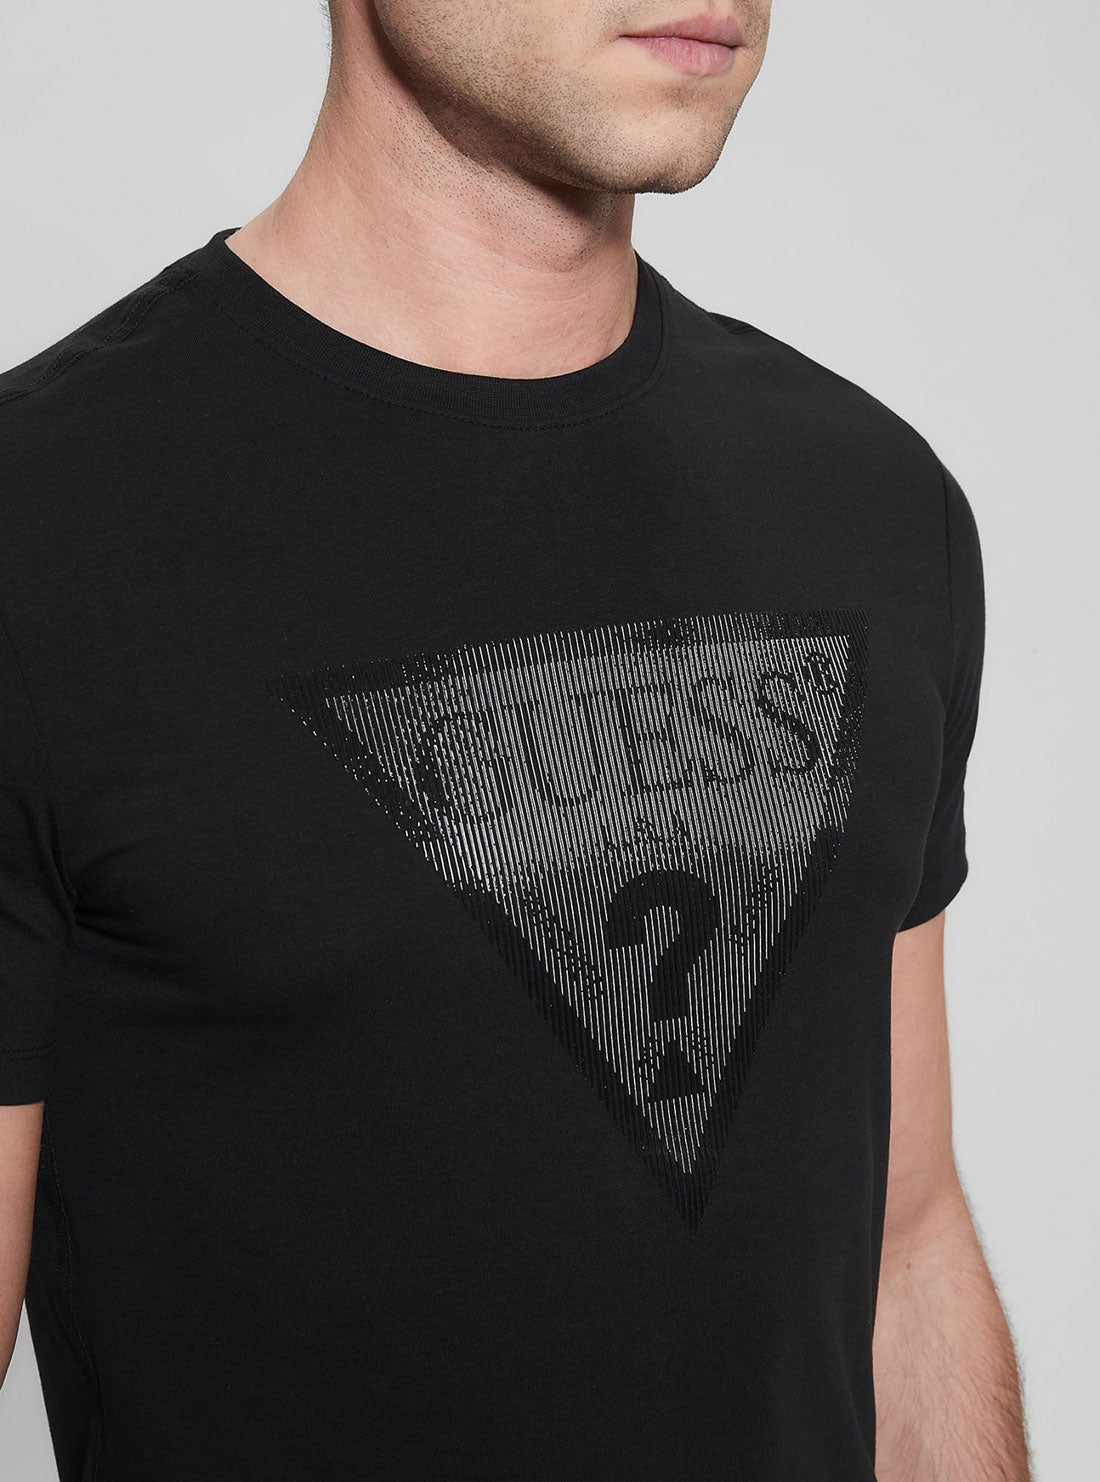 GUESS Men's Eco Black Shiny Gel Logo T-Shirt M3GI33J1314 Side Detail View